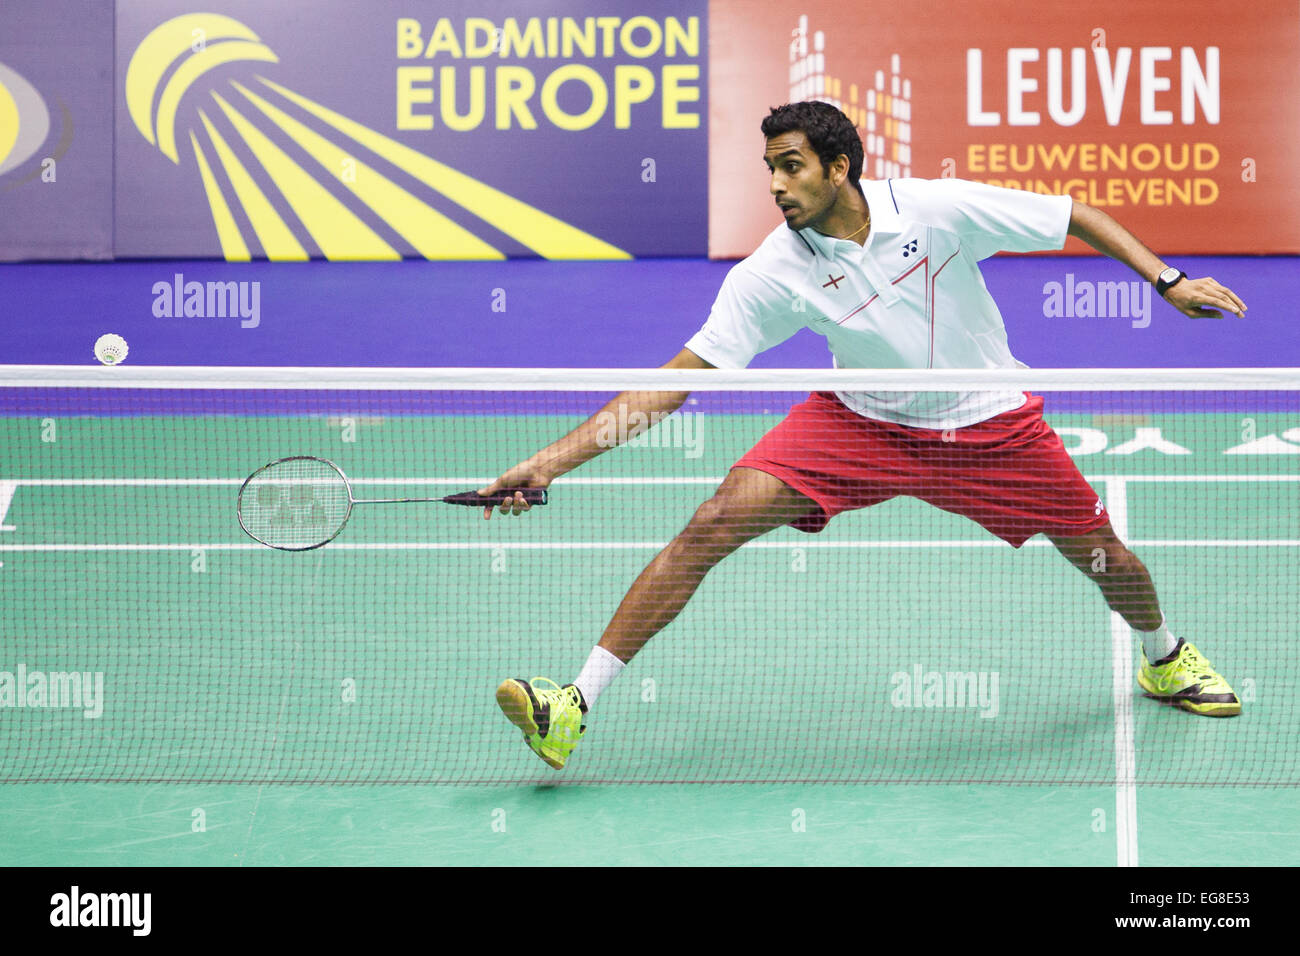 Badminton player belgium hi-res stock photography and images - Alamy